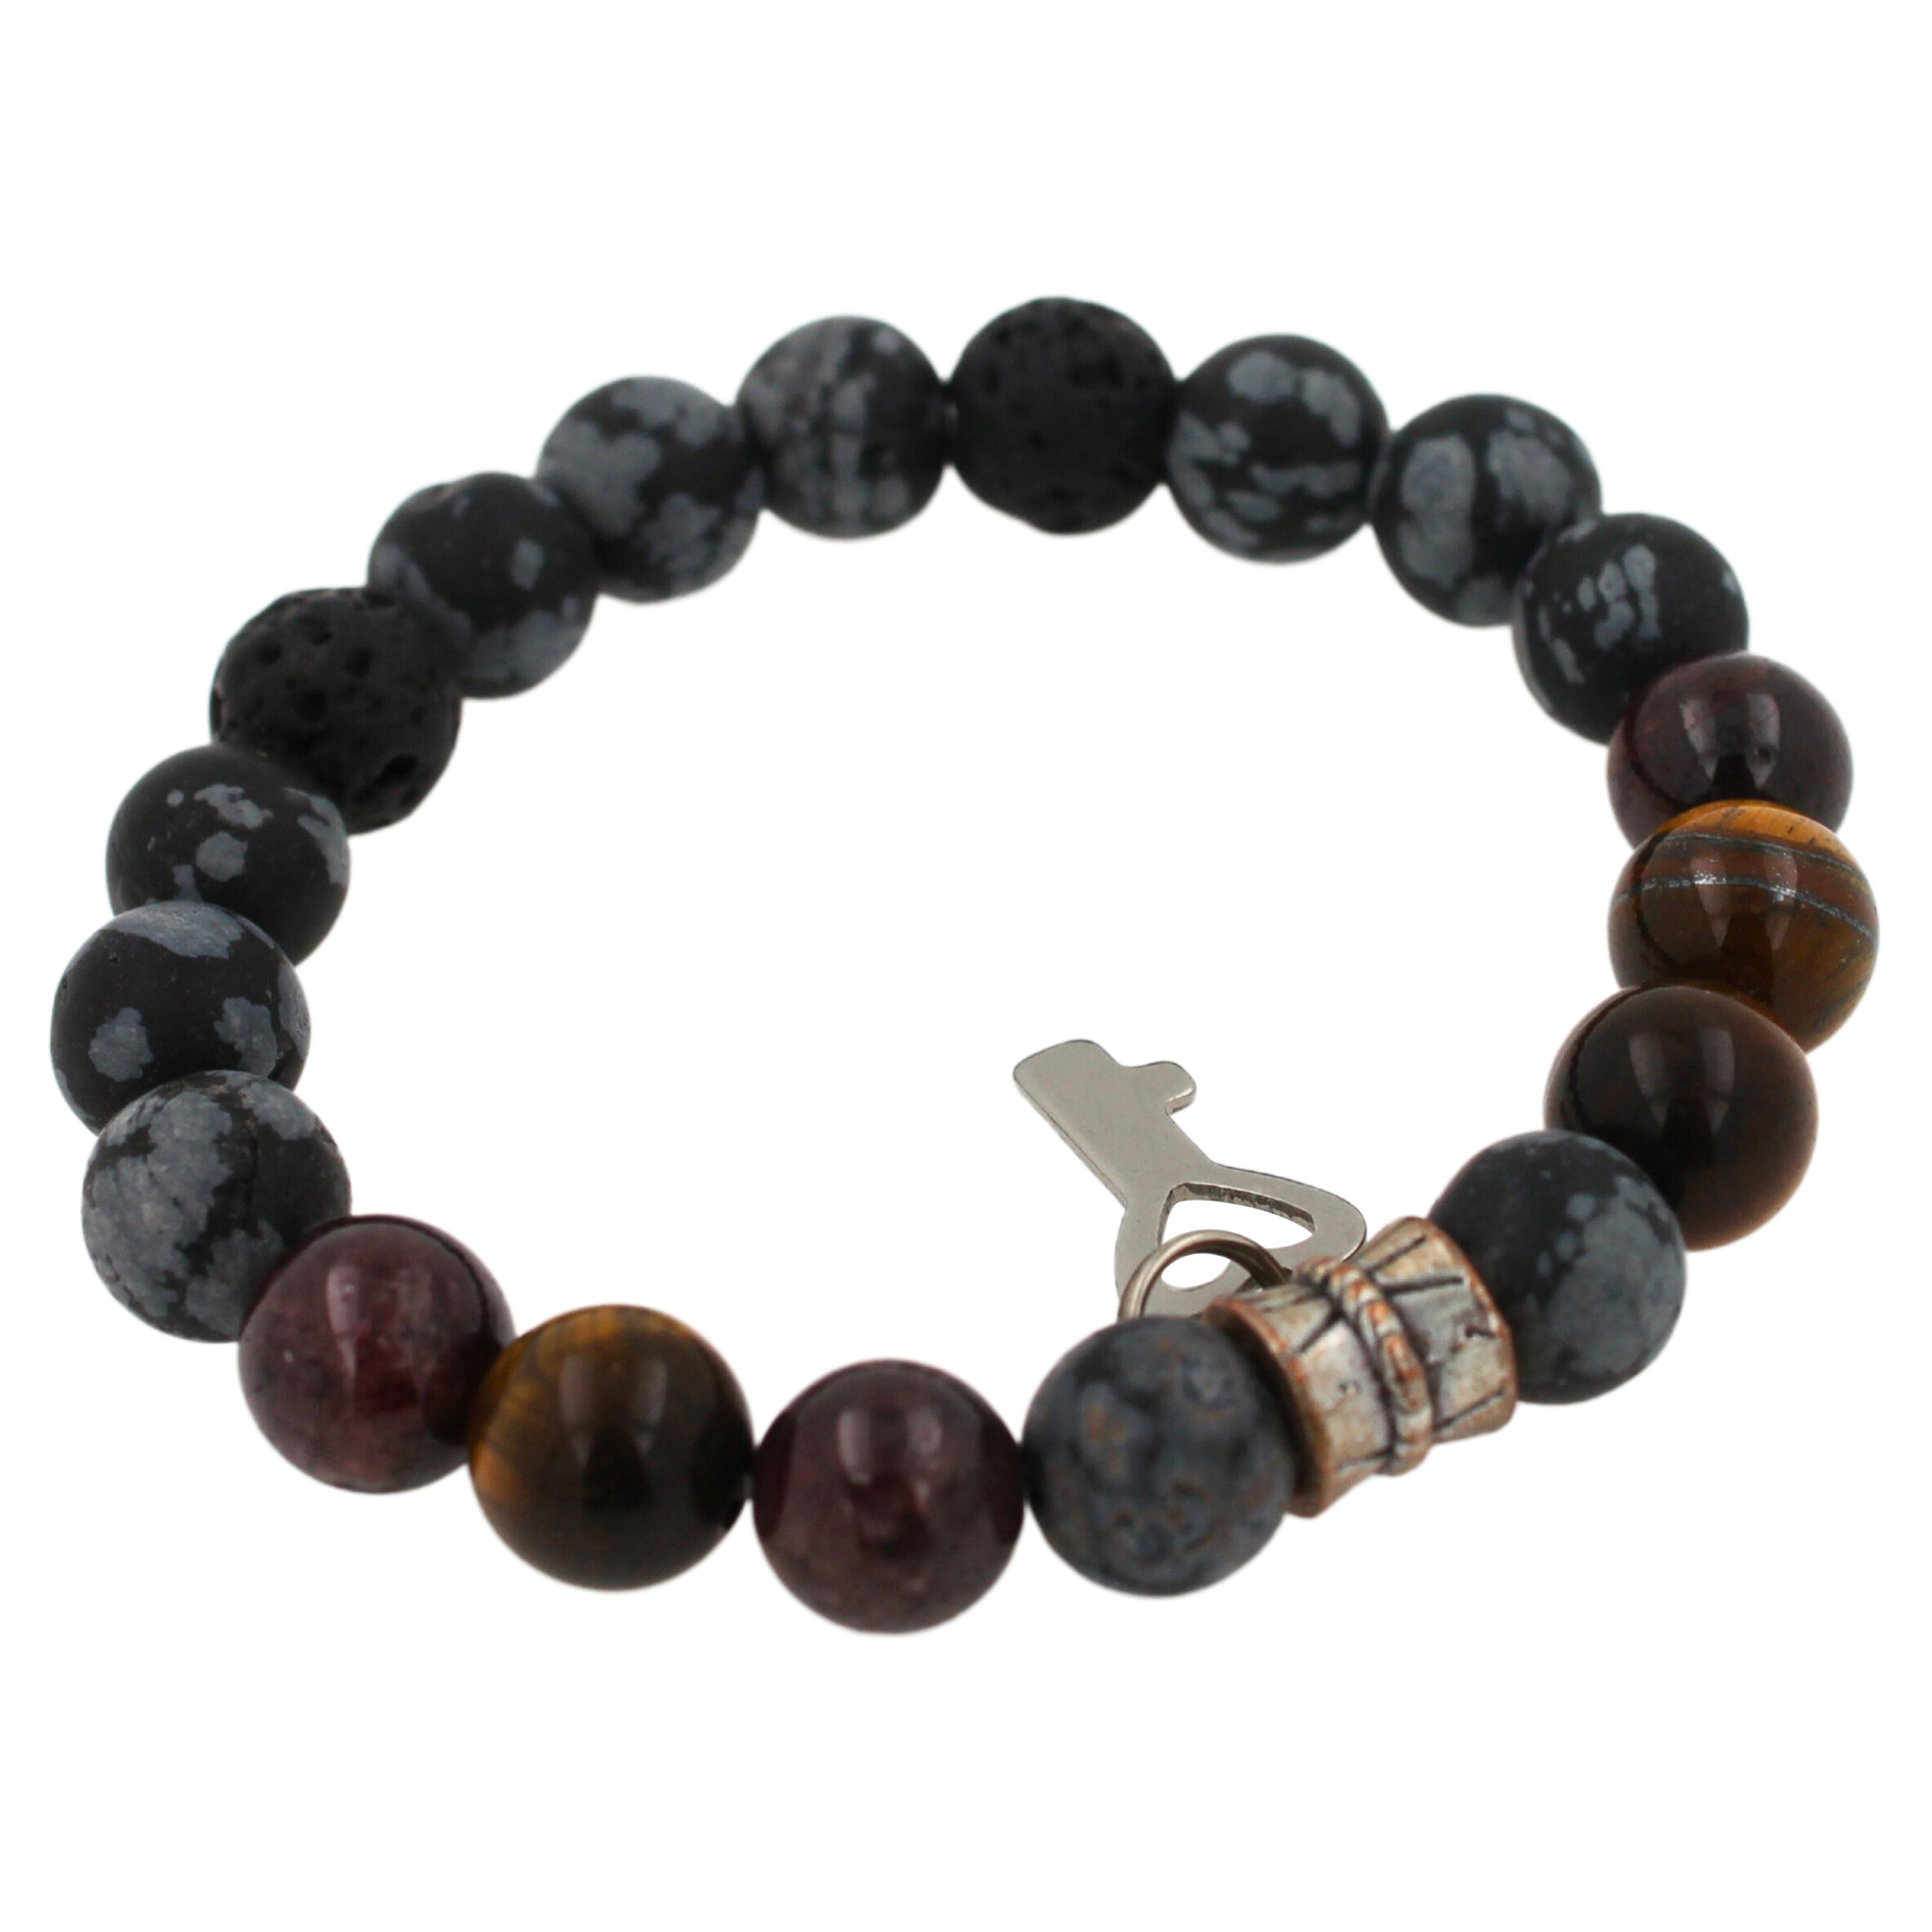 Black Agate Earth Gemstone Round Chakra Beads Stretchy Unique Statement Bracelet